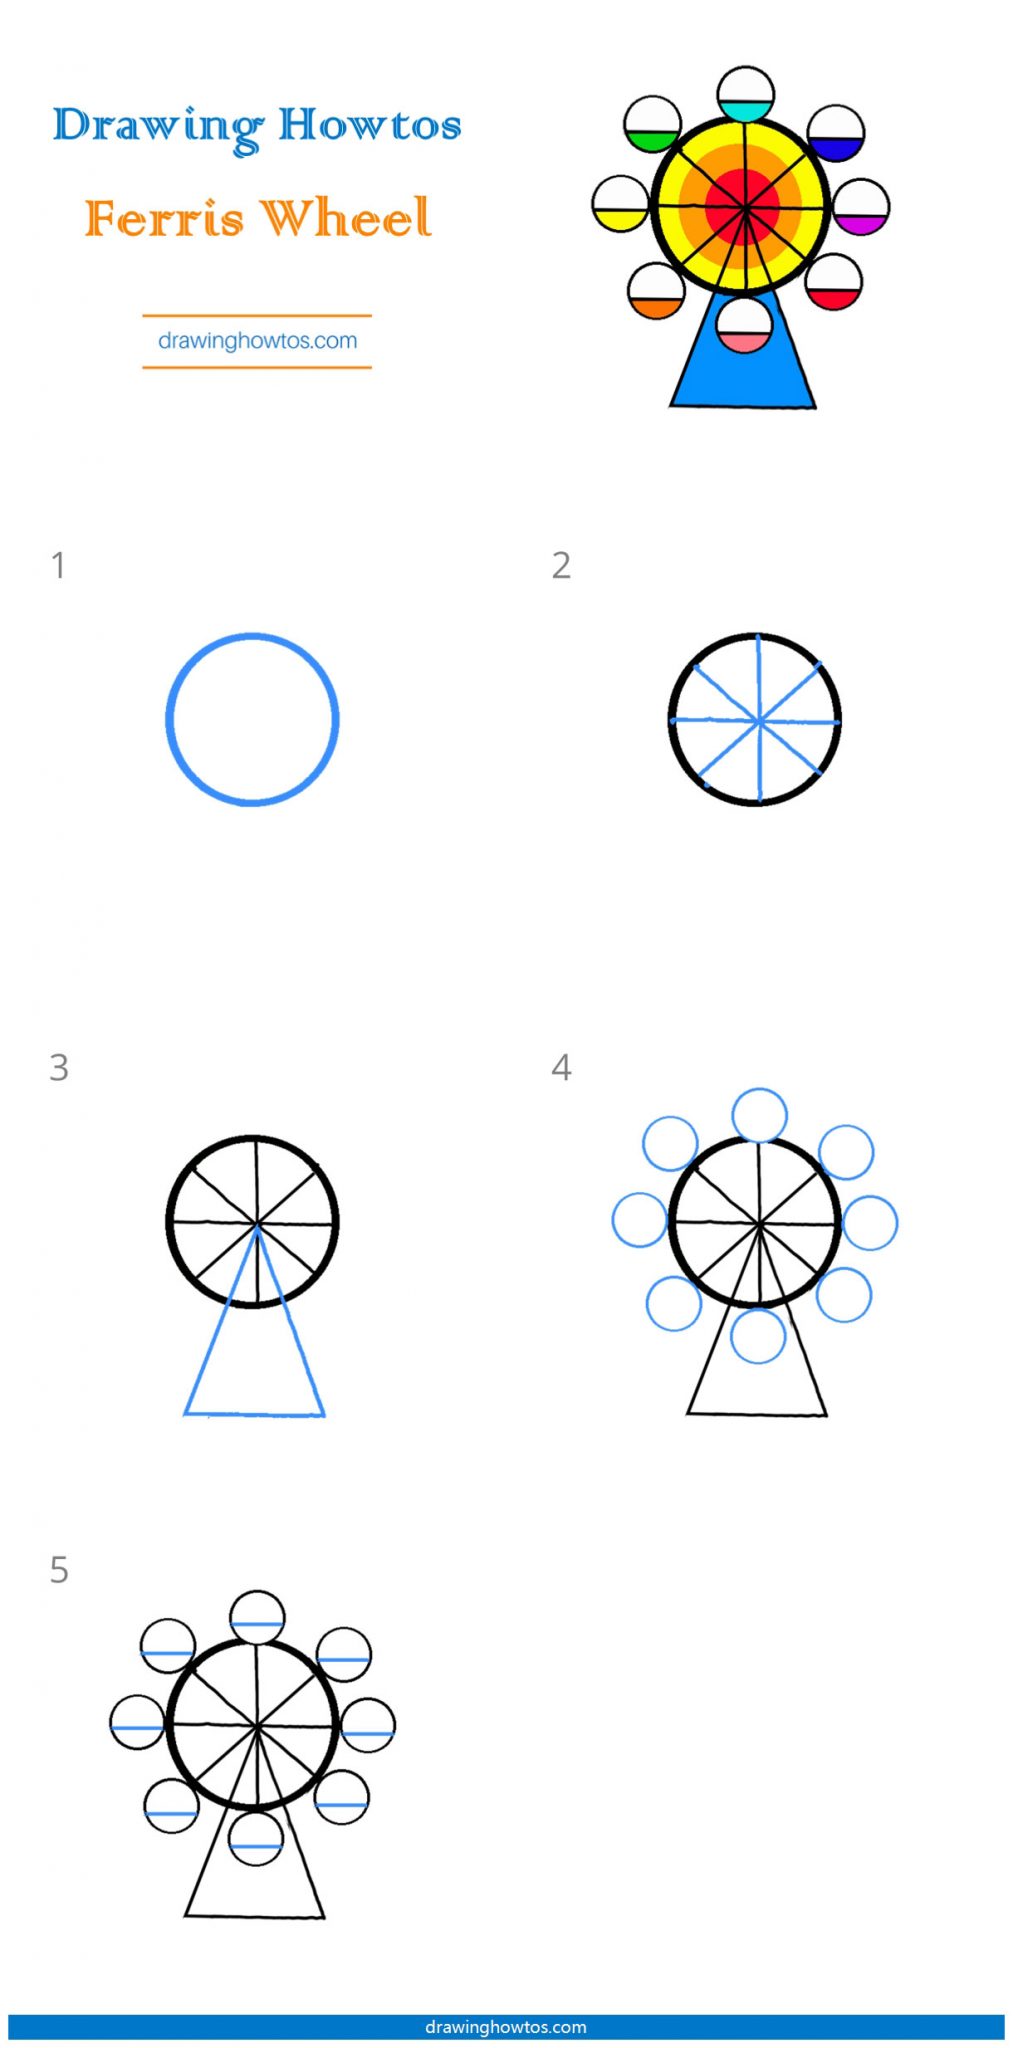 Ferris Wheel Drawing Guide